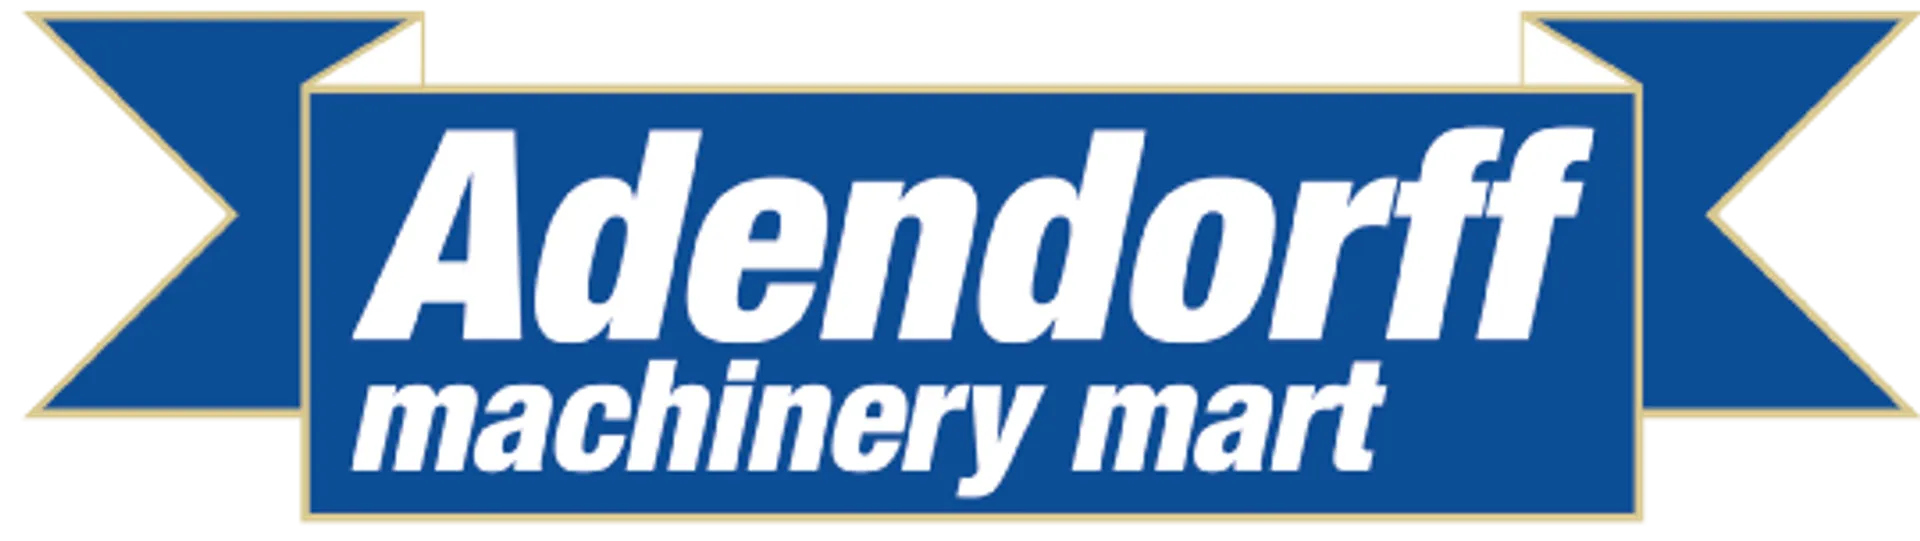 ADENDORFF MACHINERY MART logo. Current catalogue